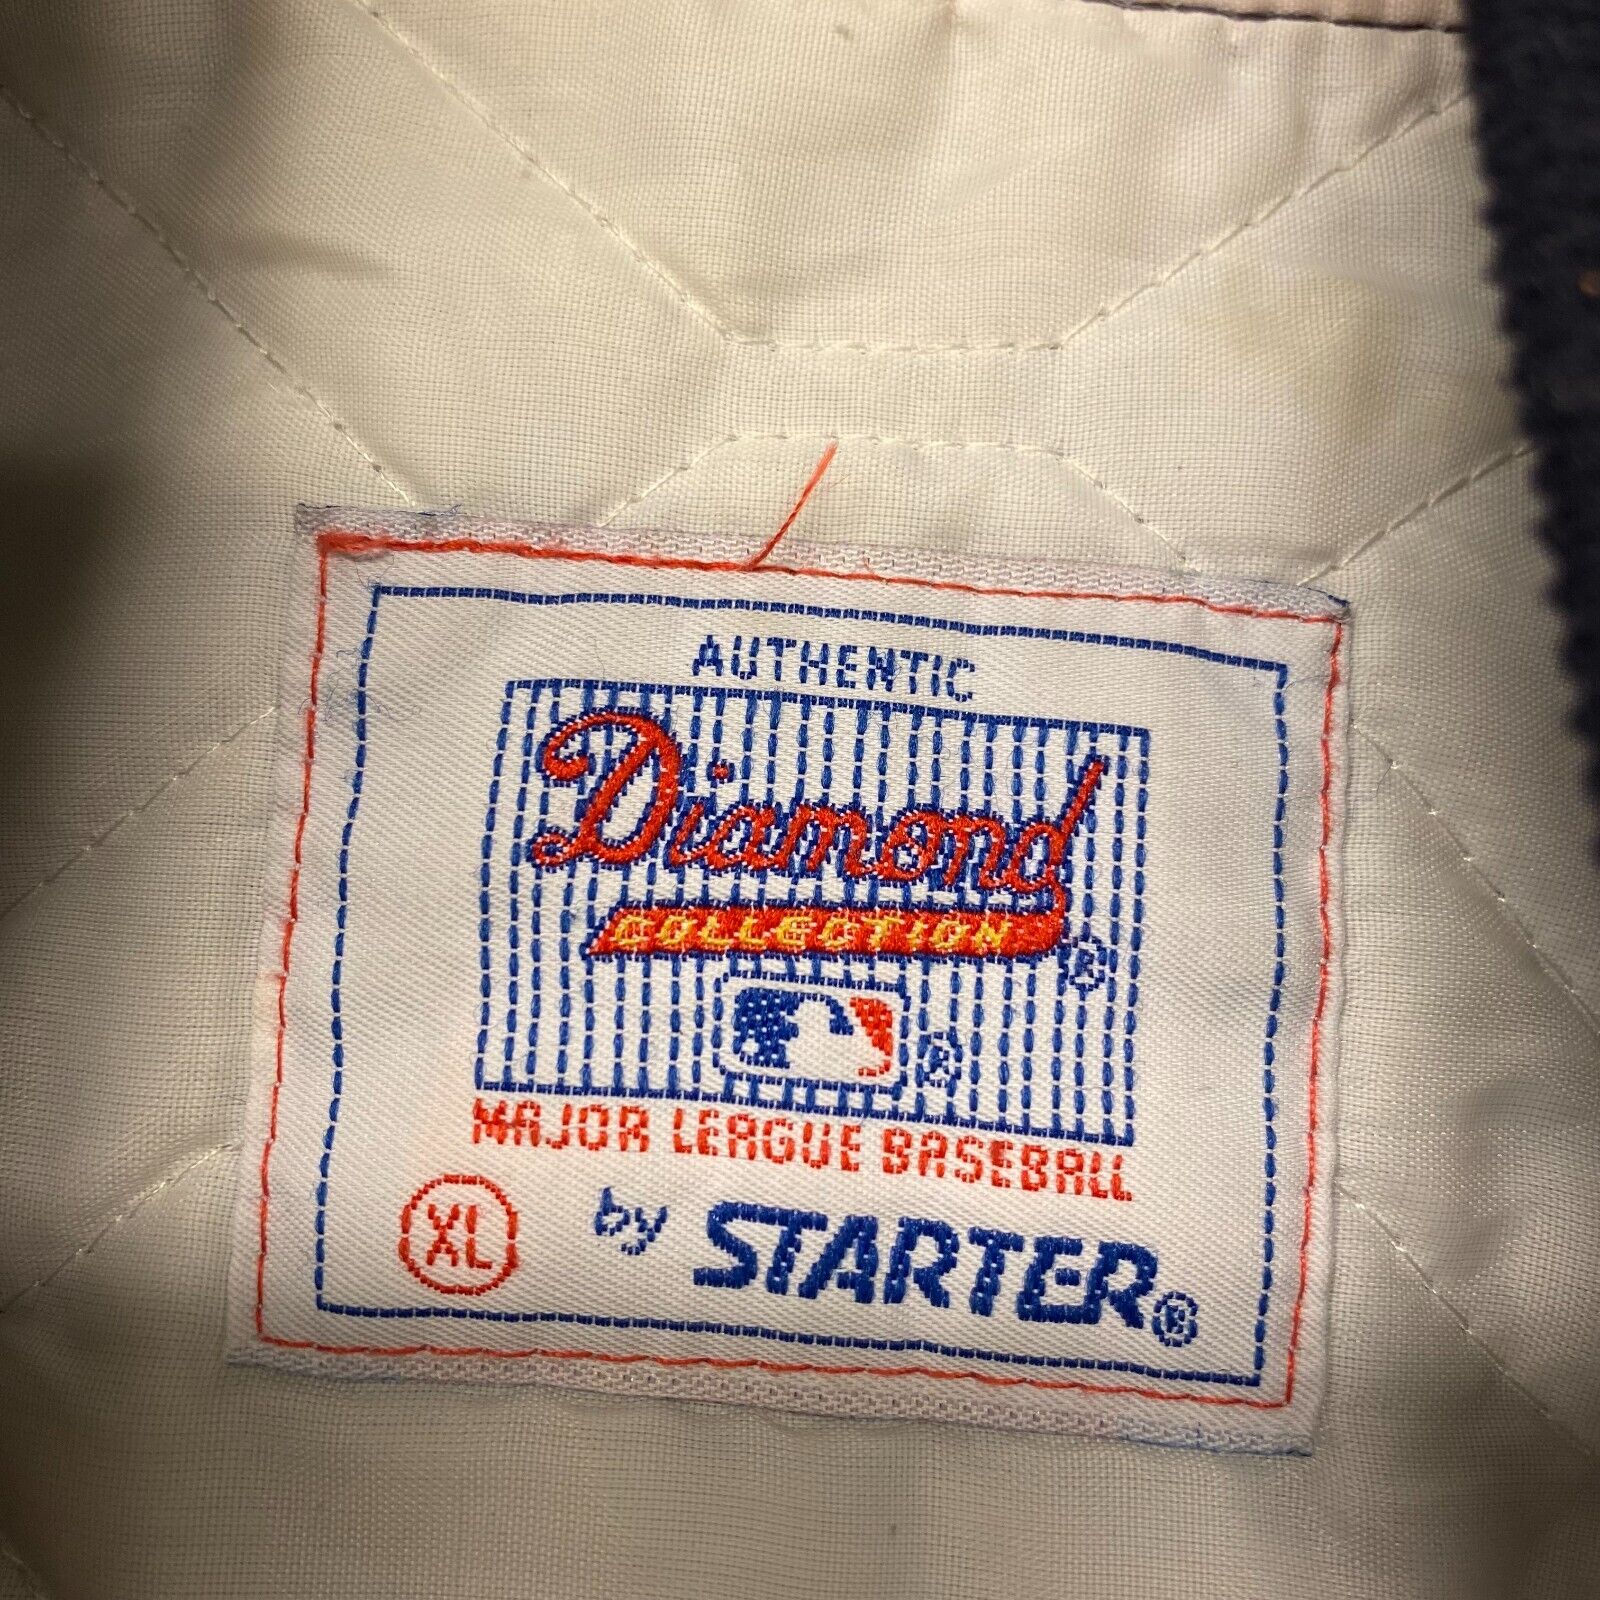 MLB Brewers Starter Satin Jacket Size XL